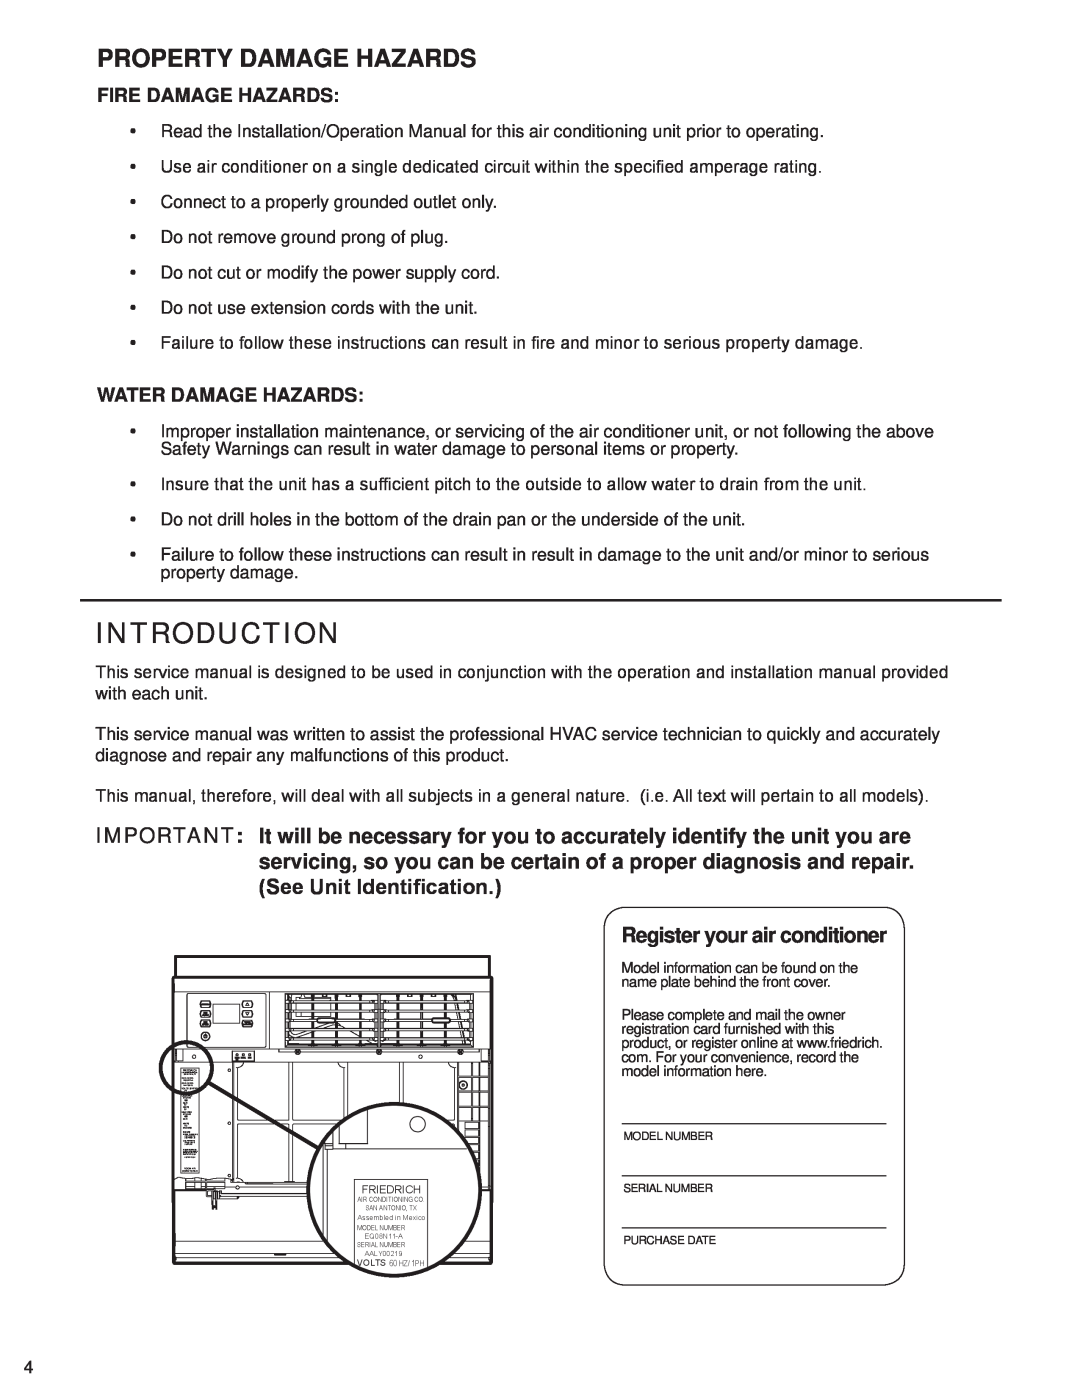 Friedrich SQ10N10, SQ08N10 manual Introduction, Property Damage Hazards, Register your air conditioner, Fire Damage Hazards 